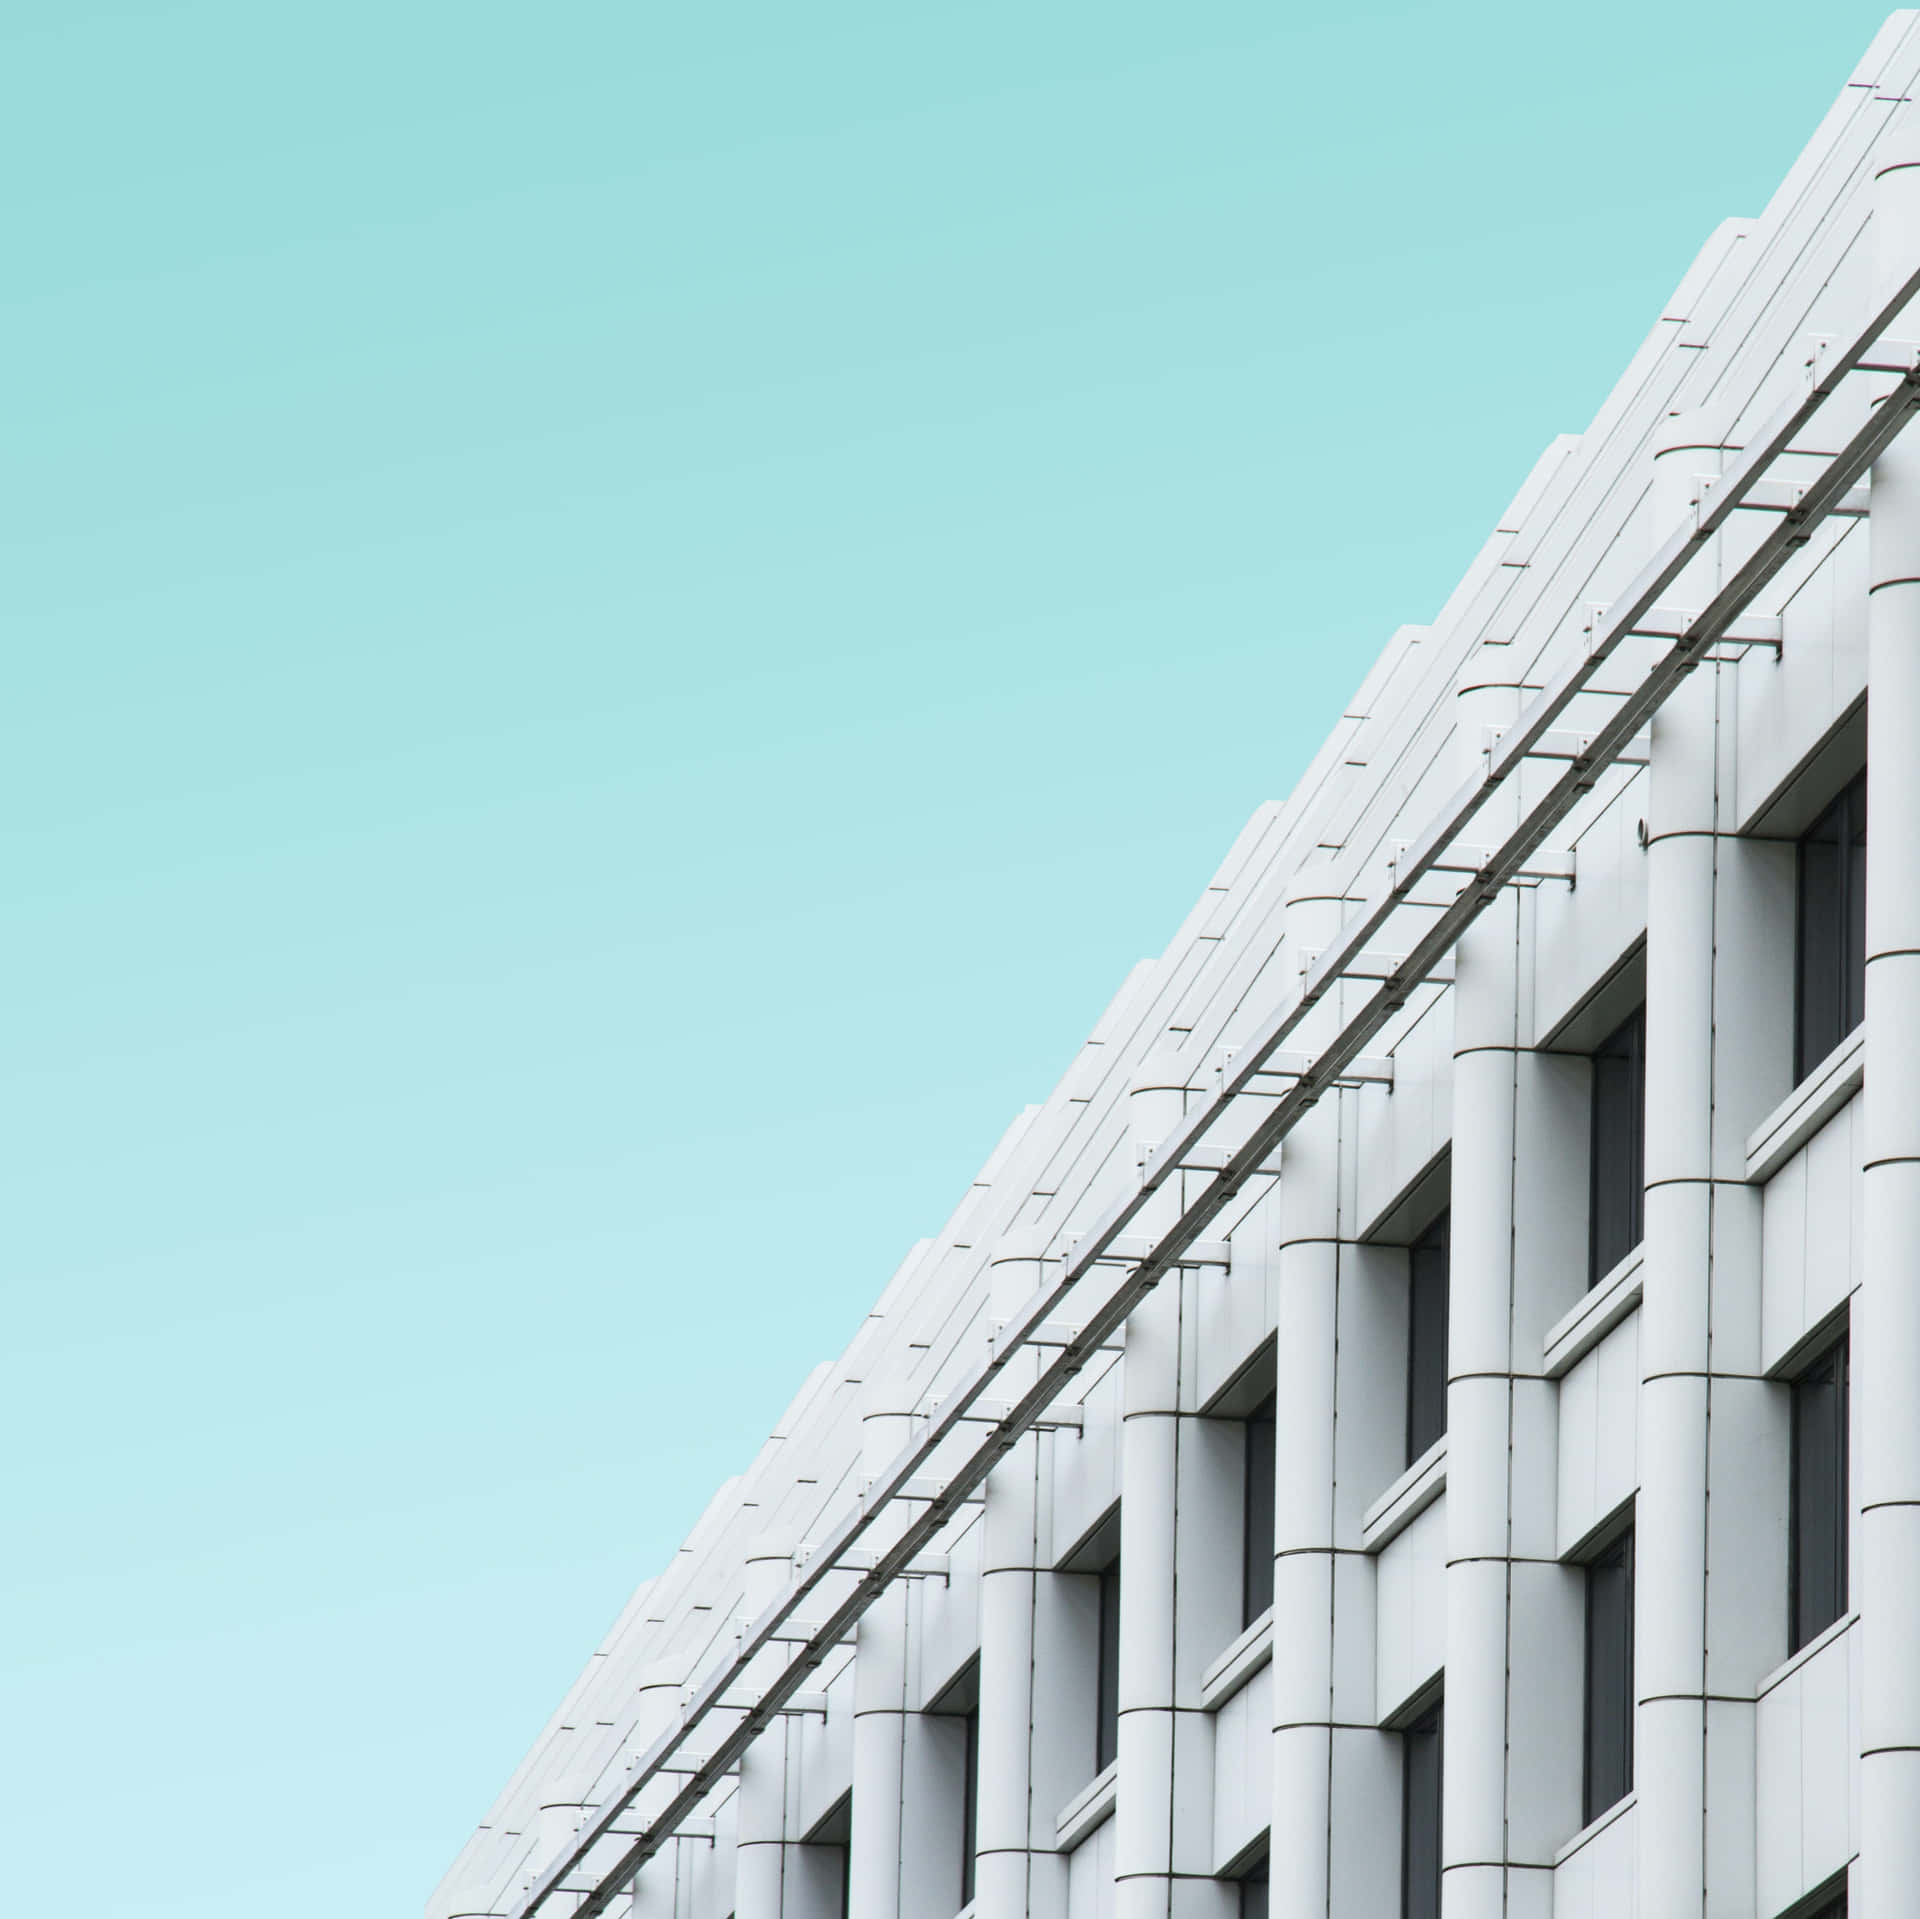 Repetitive White Building [wallpaper] Wallpaper